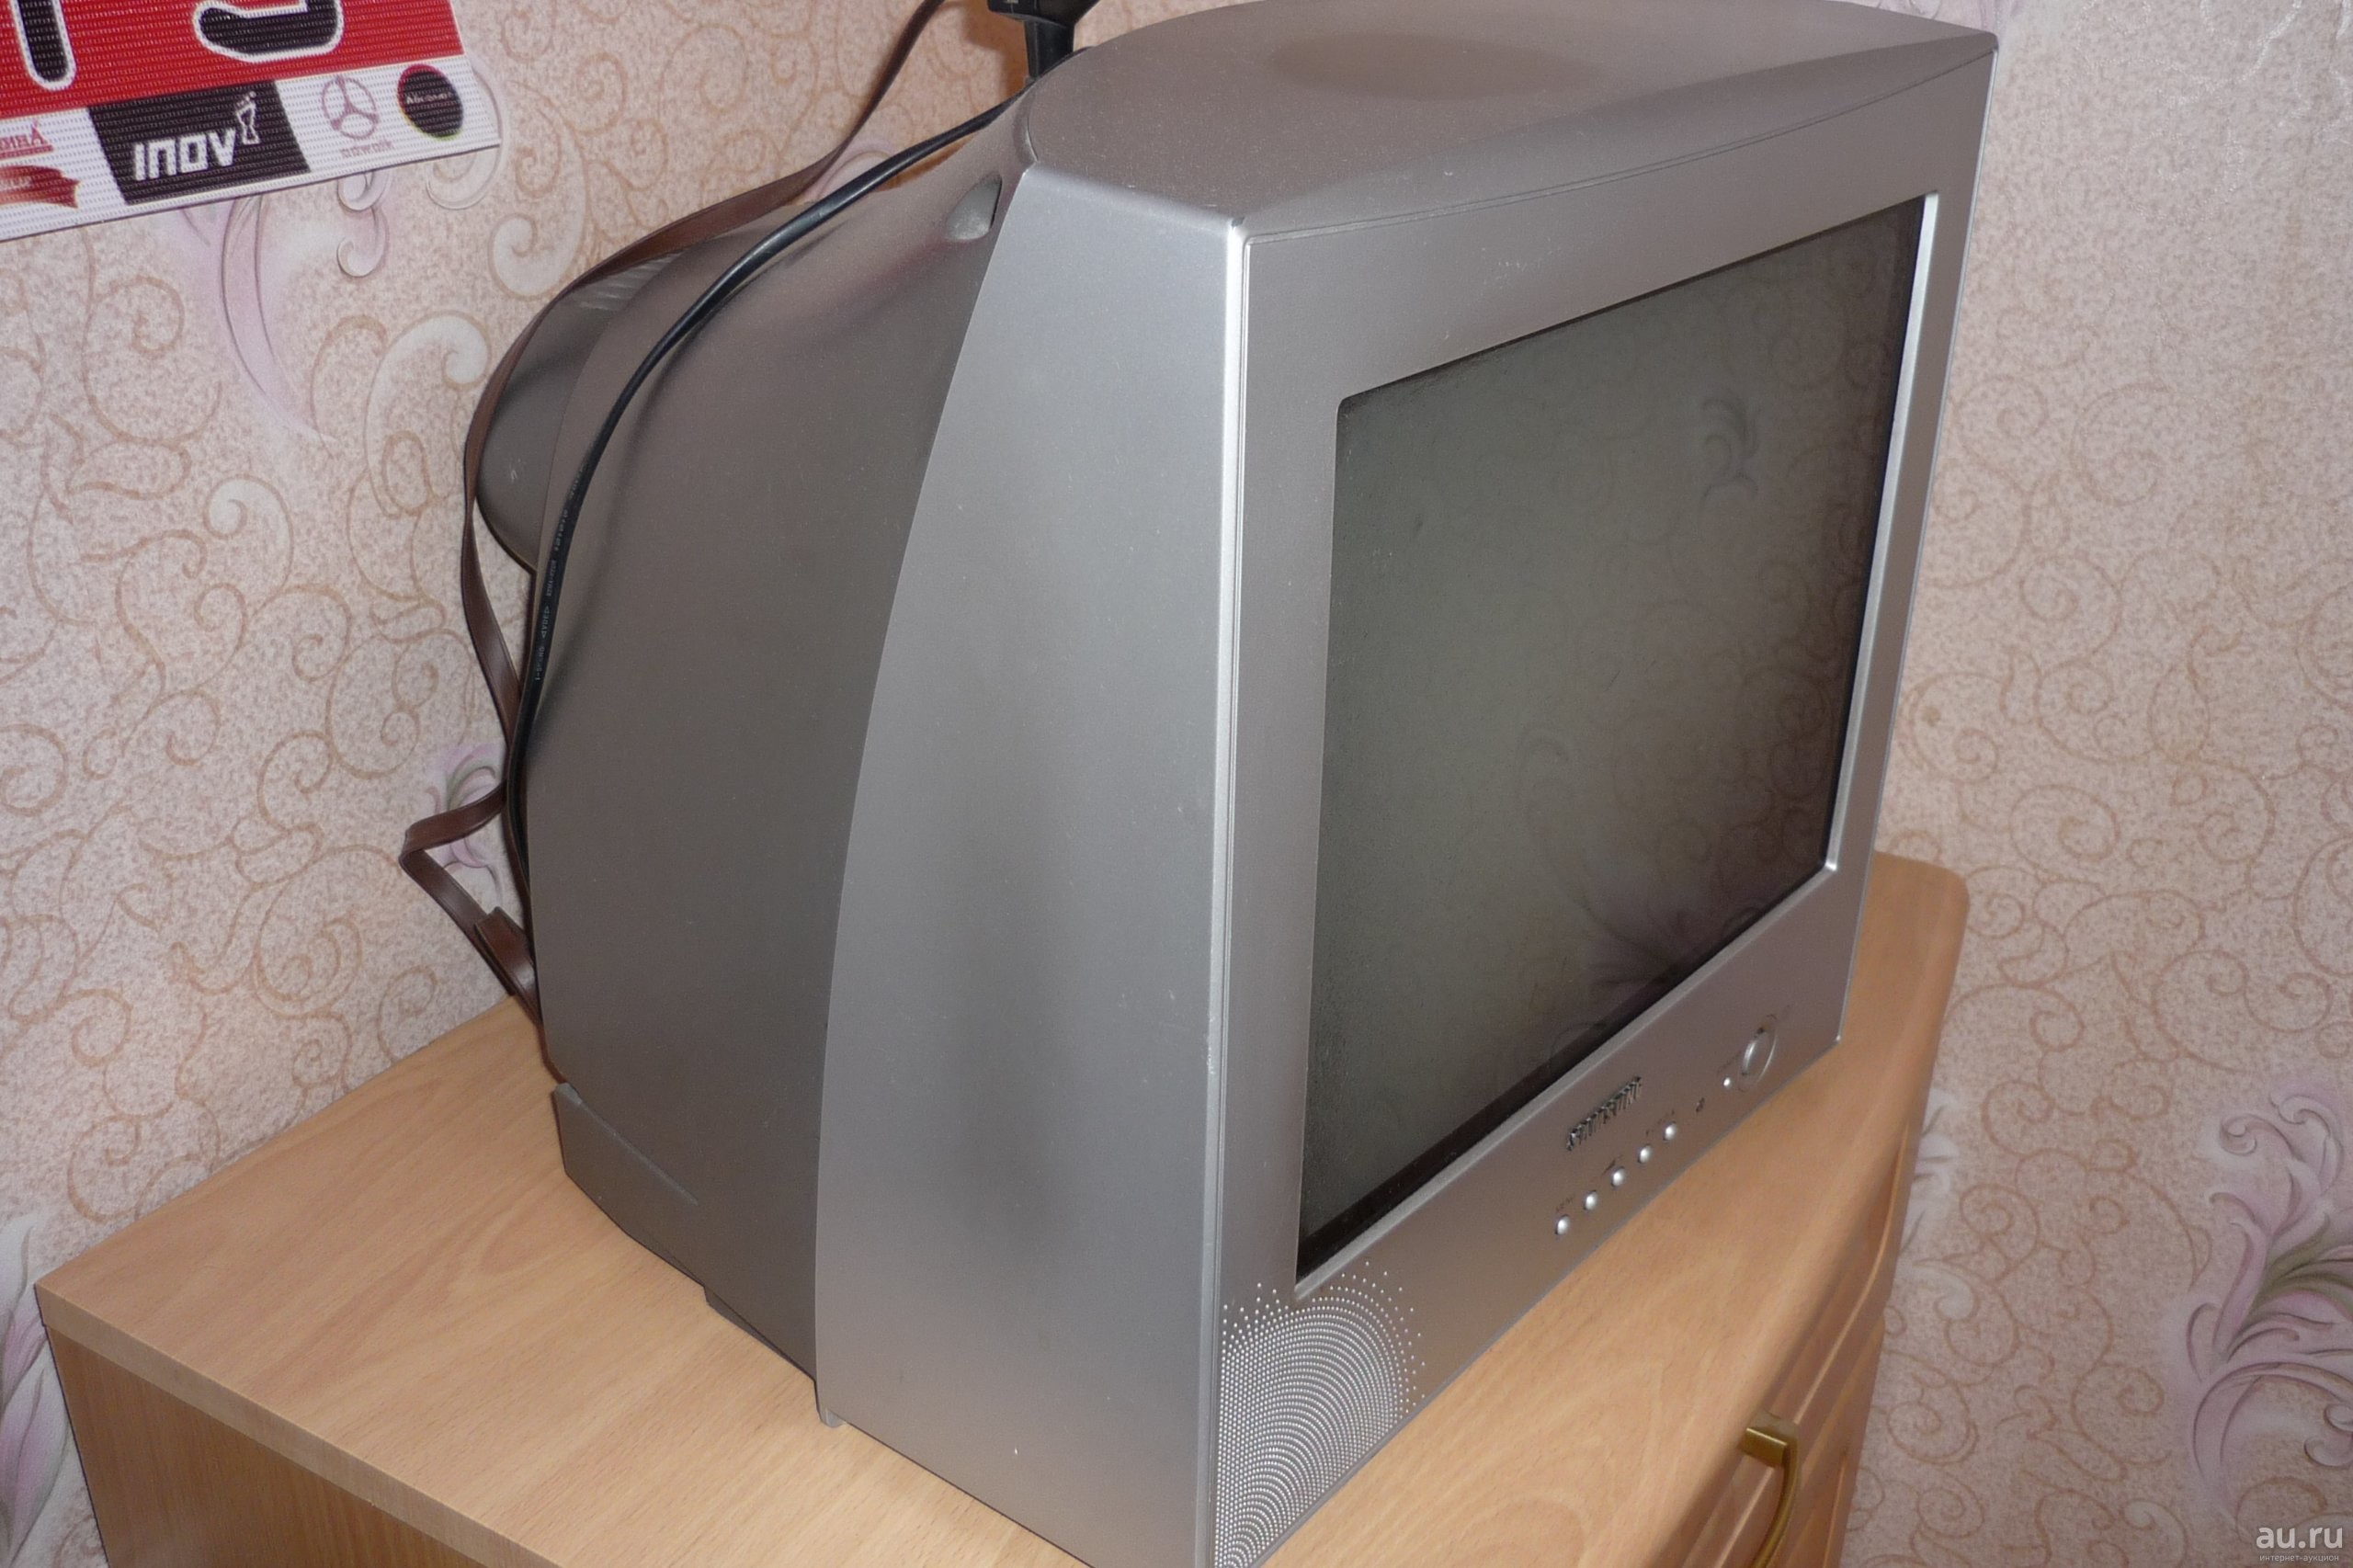 Авито куплю маленький телевизор. Телевизор самсунг старый кинескопный. Samsung 21 дюйм кинескопный. Телевизор Sharp ЭЛТ 21 дюйм. ЭЛТ телевизор Sharp 21 дюймов.